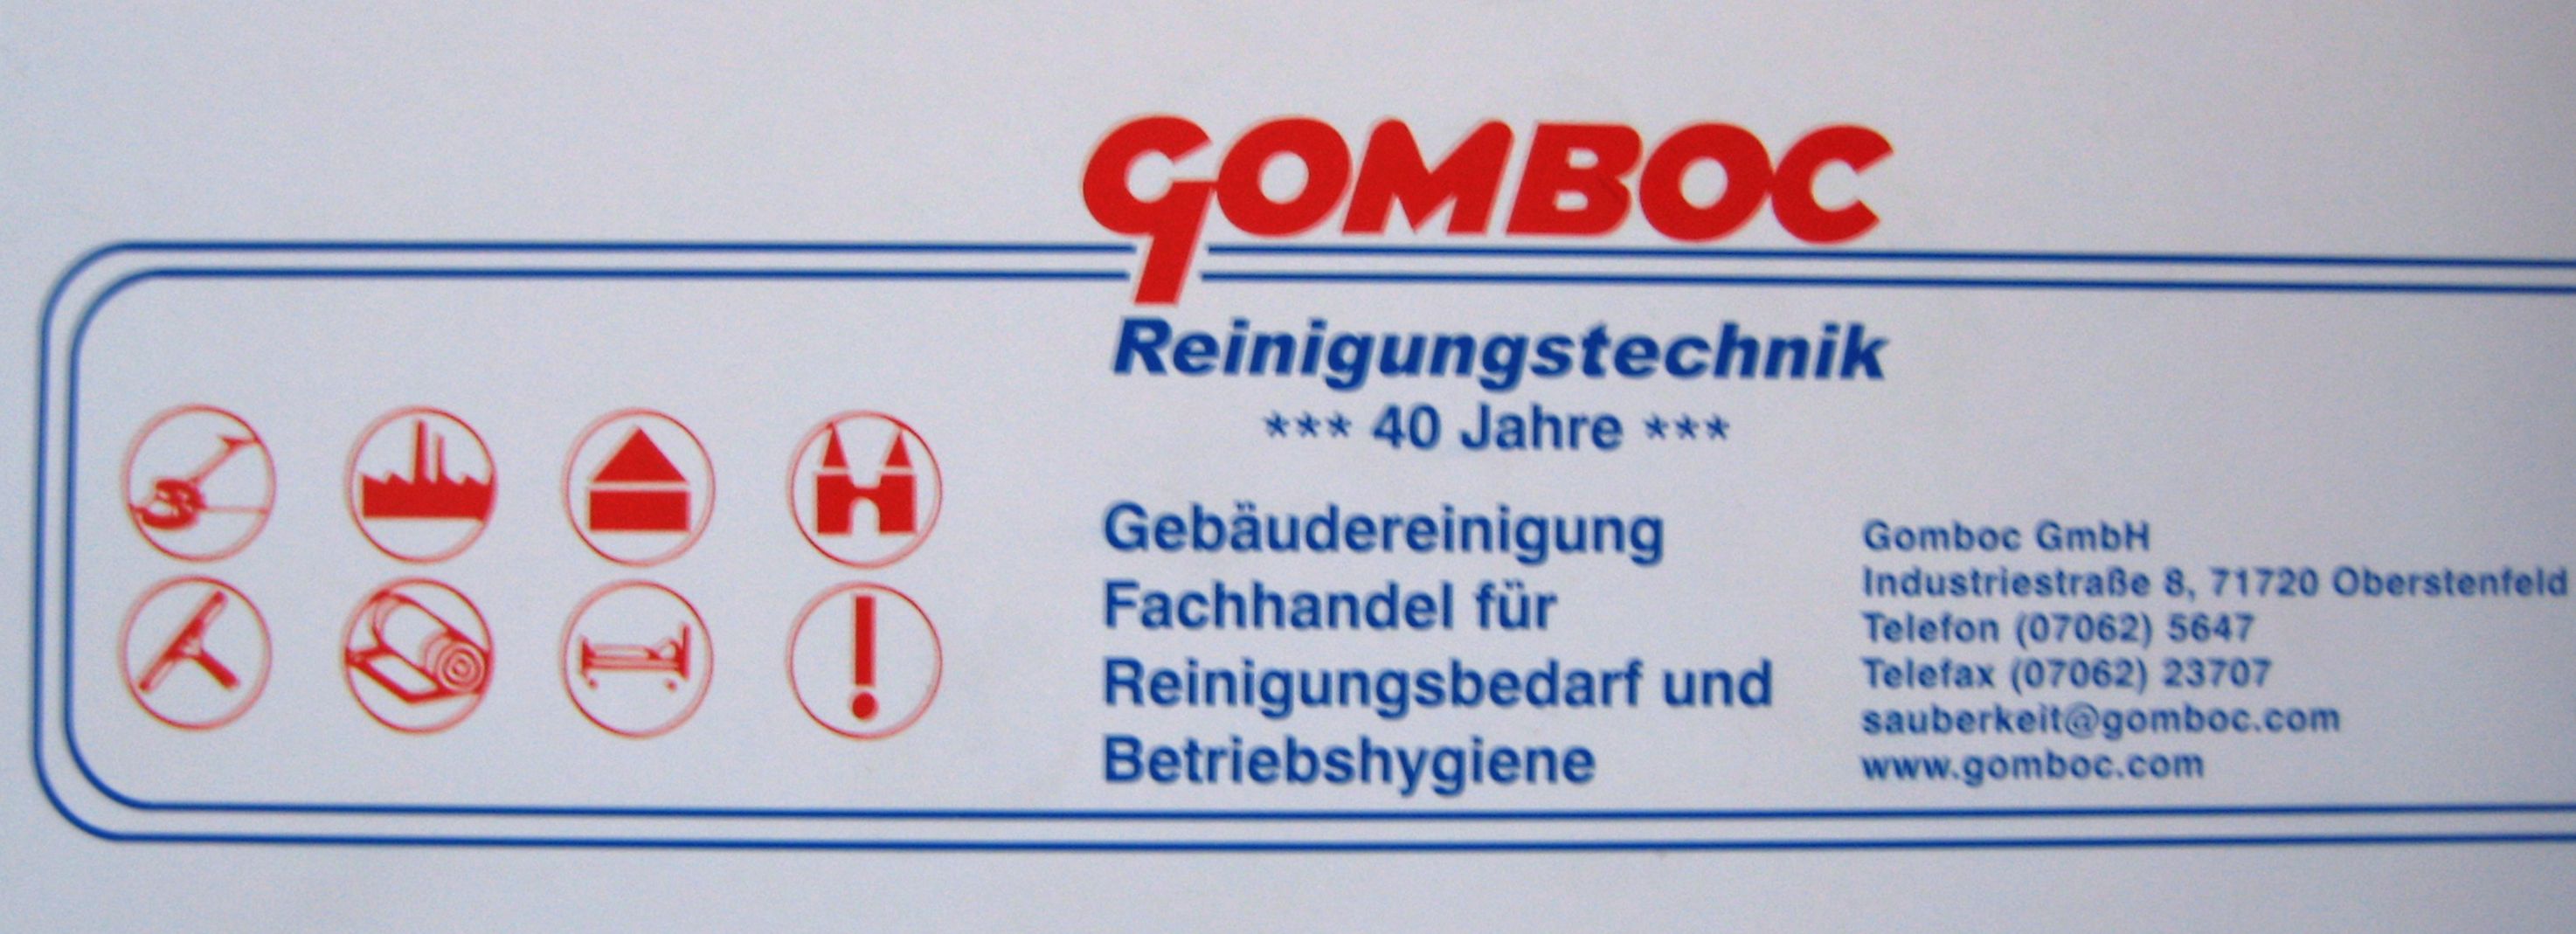 Gomboc GmbH